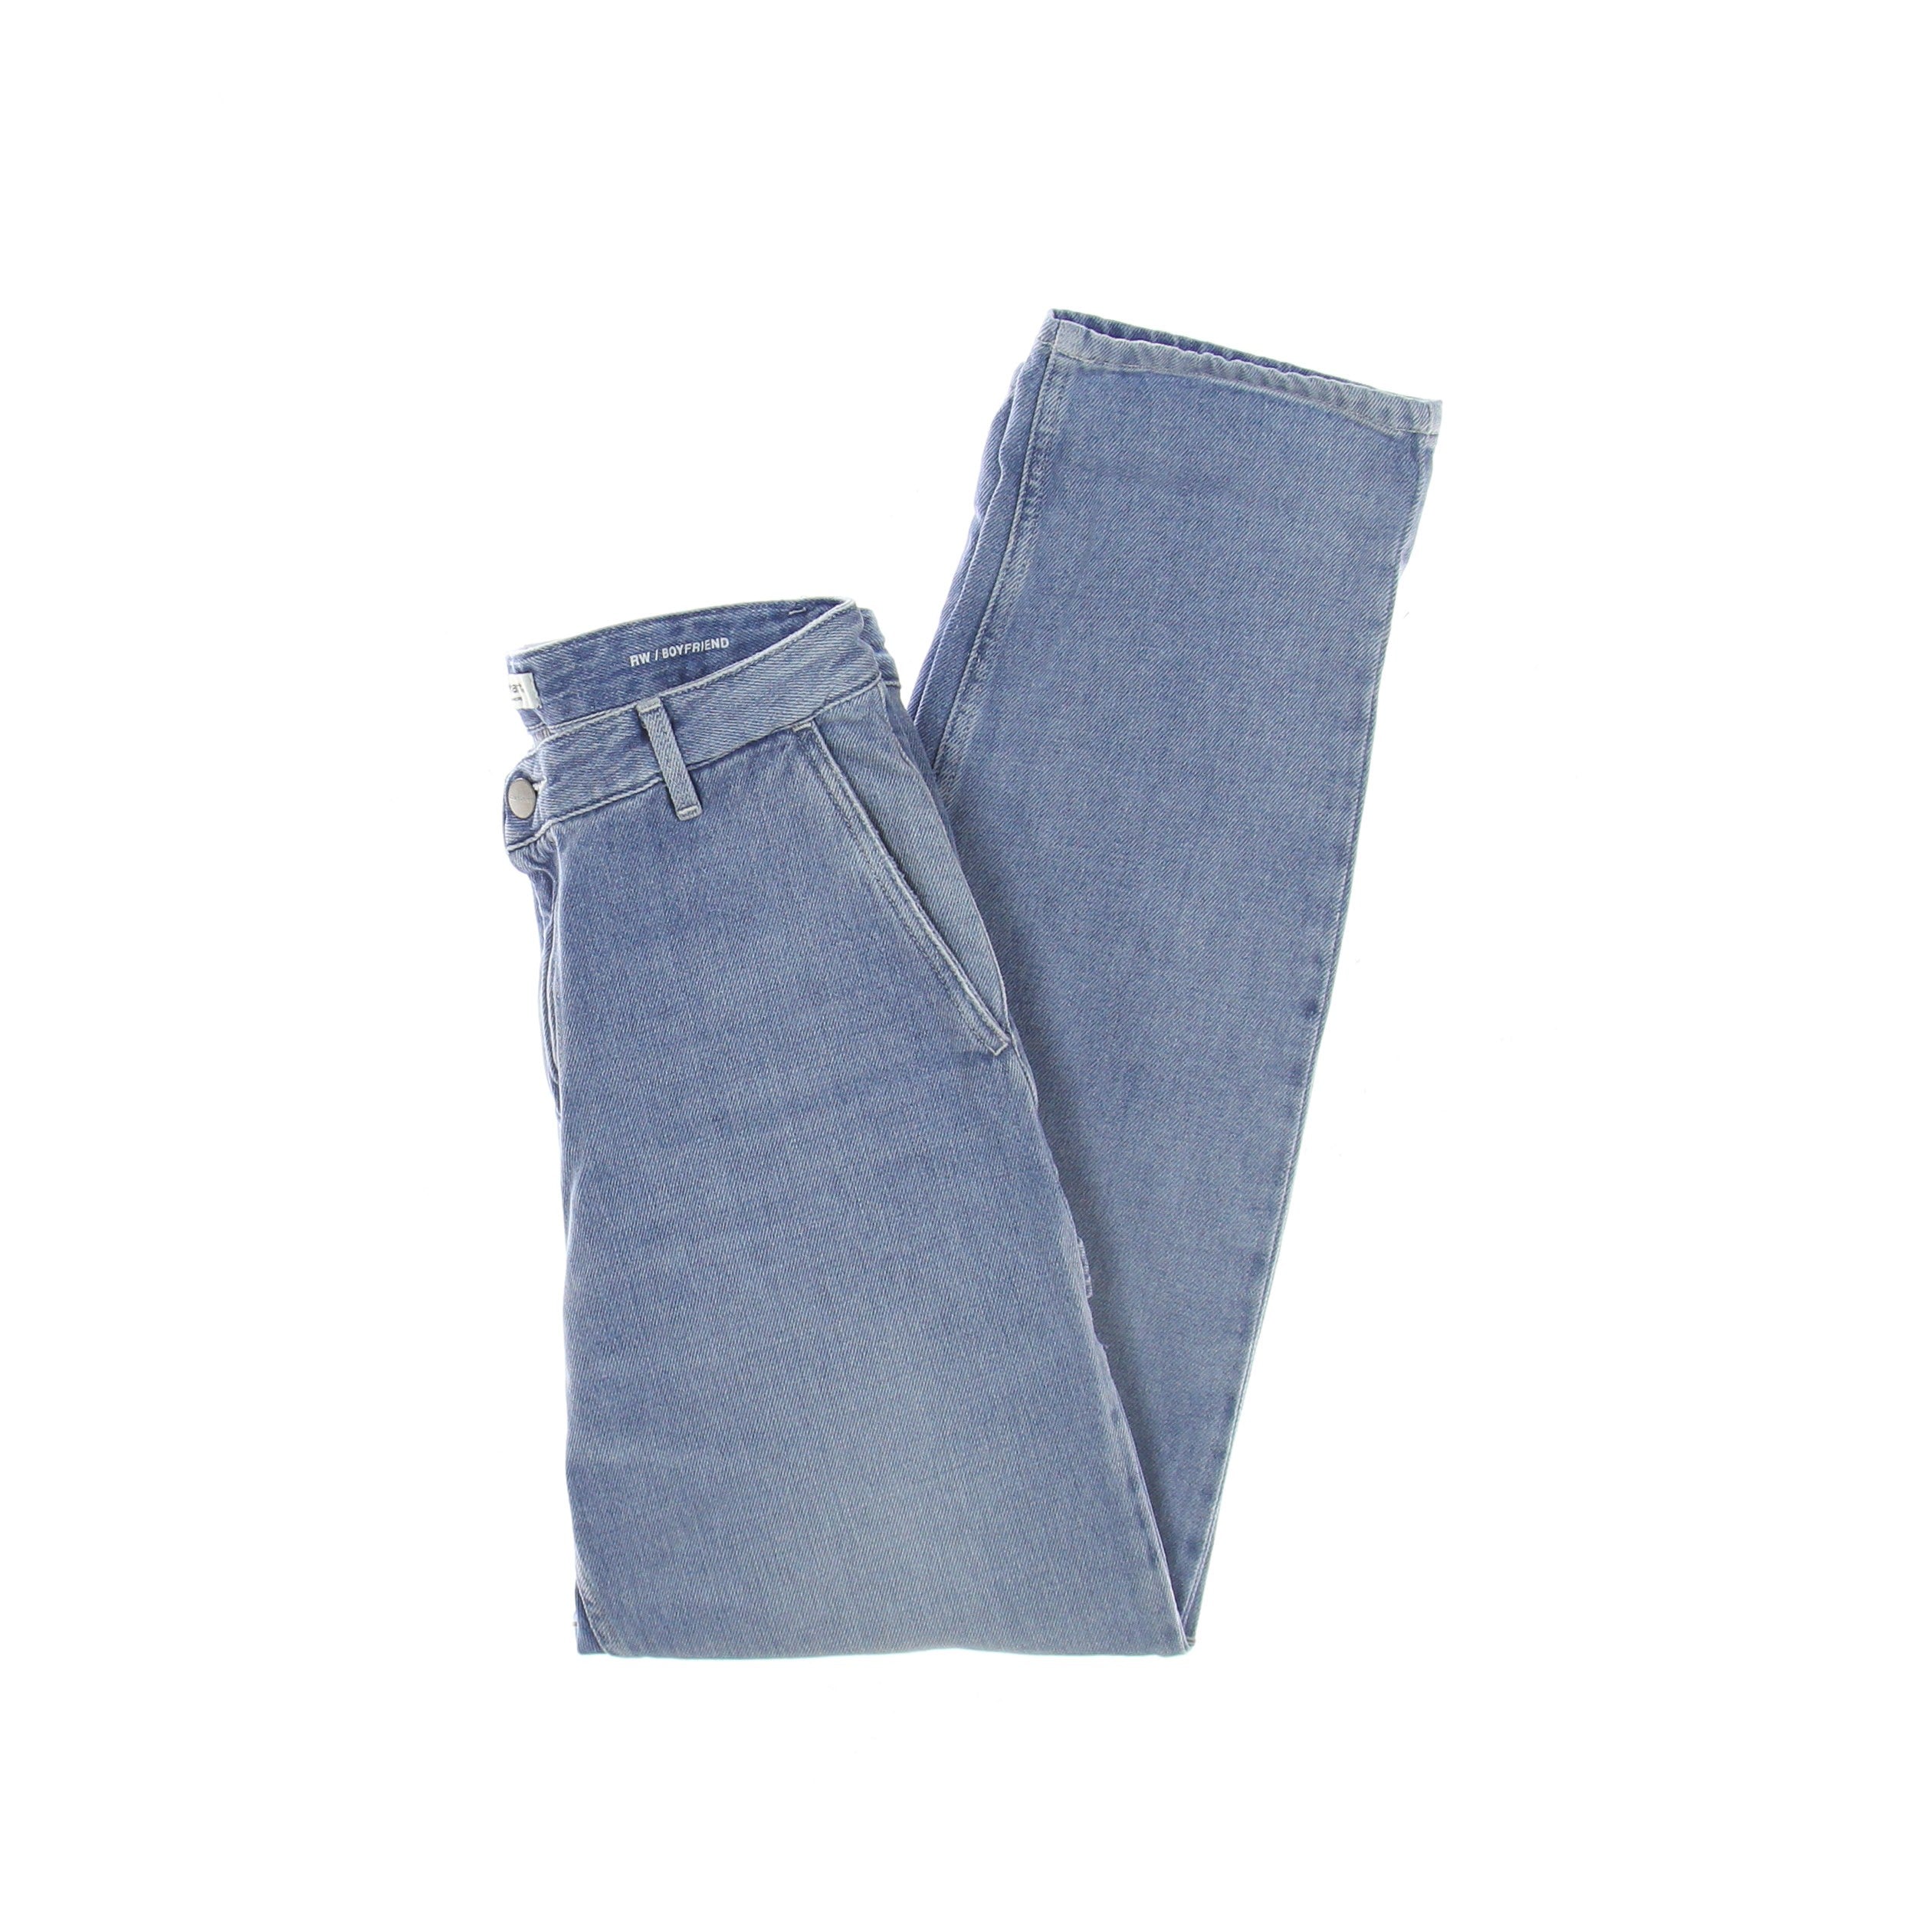 Women's Jeans W Pierce Pant Blue Light Stone Washed